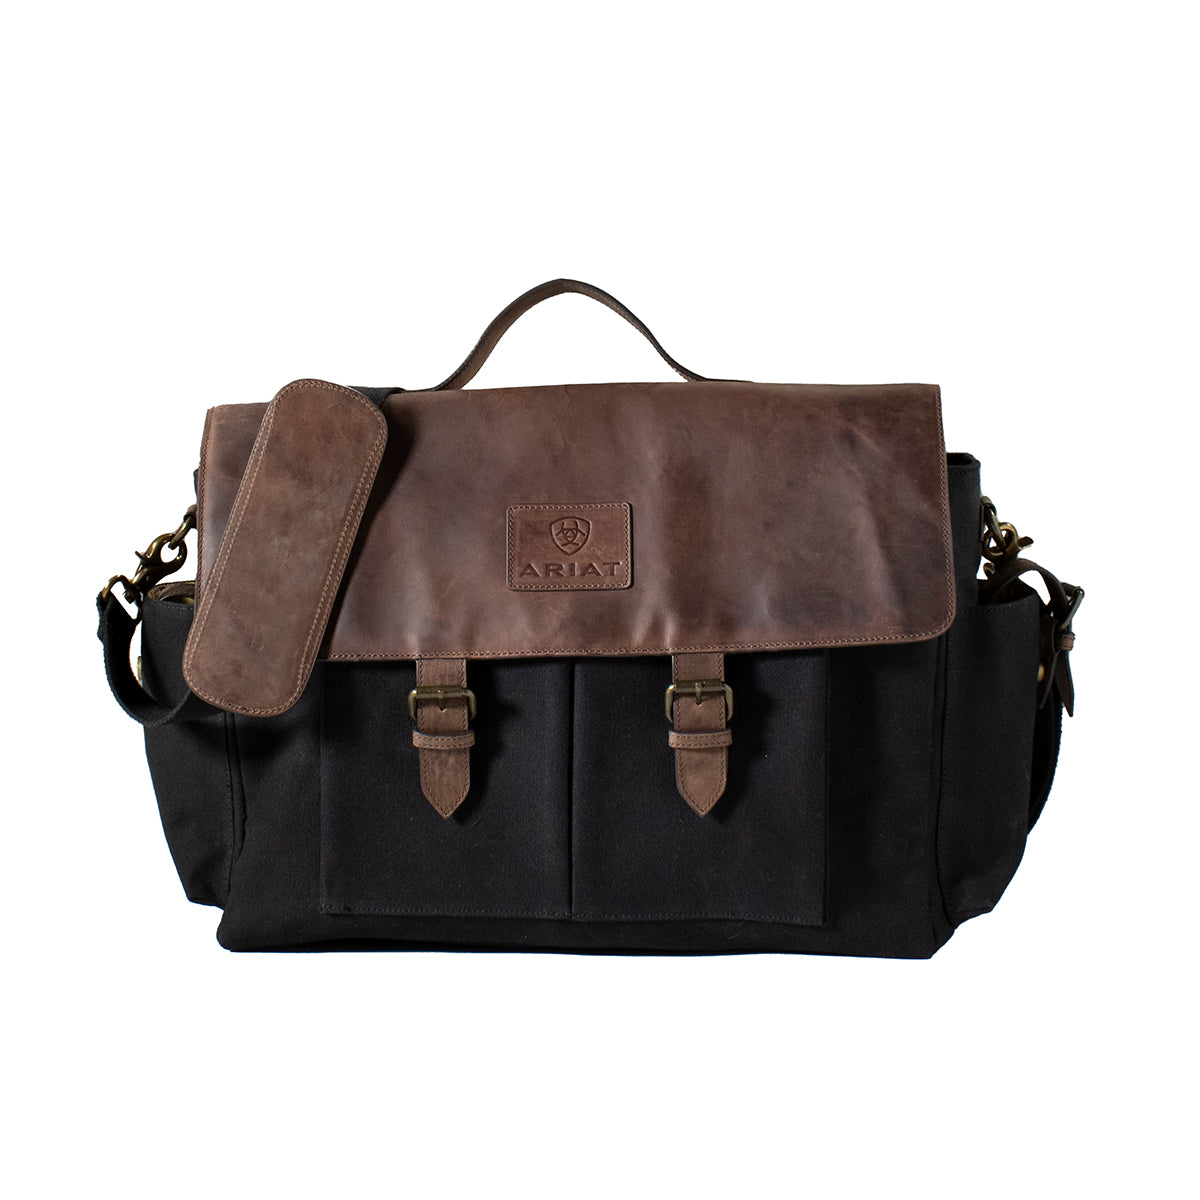 Ariat Men's Gear Messenger Bag - Black/Brown